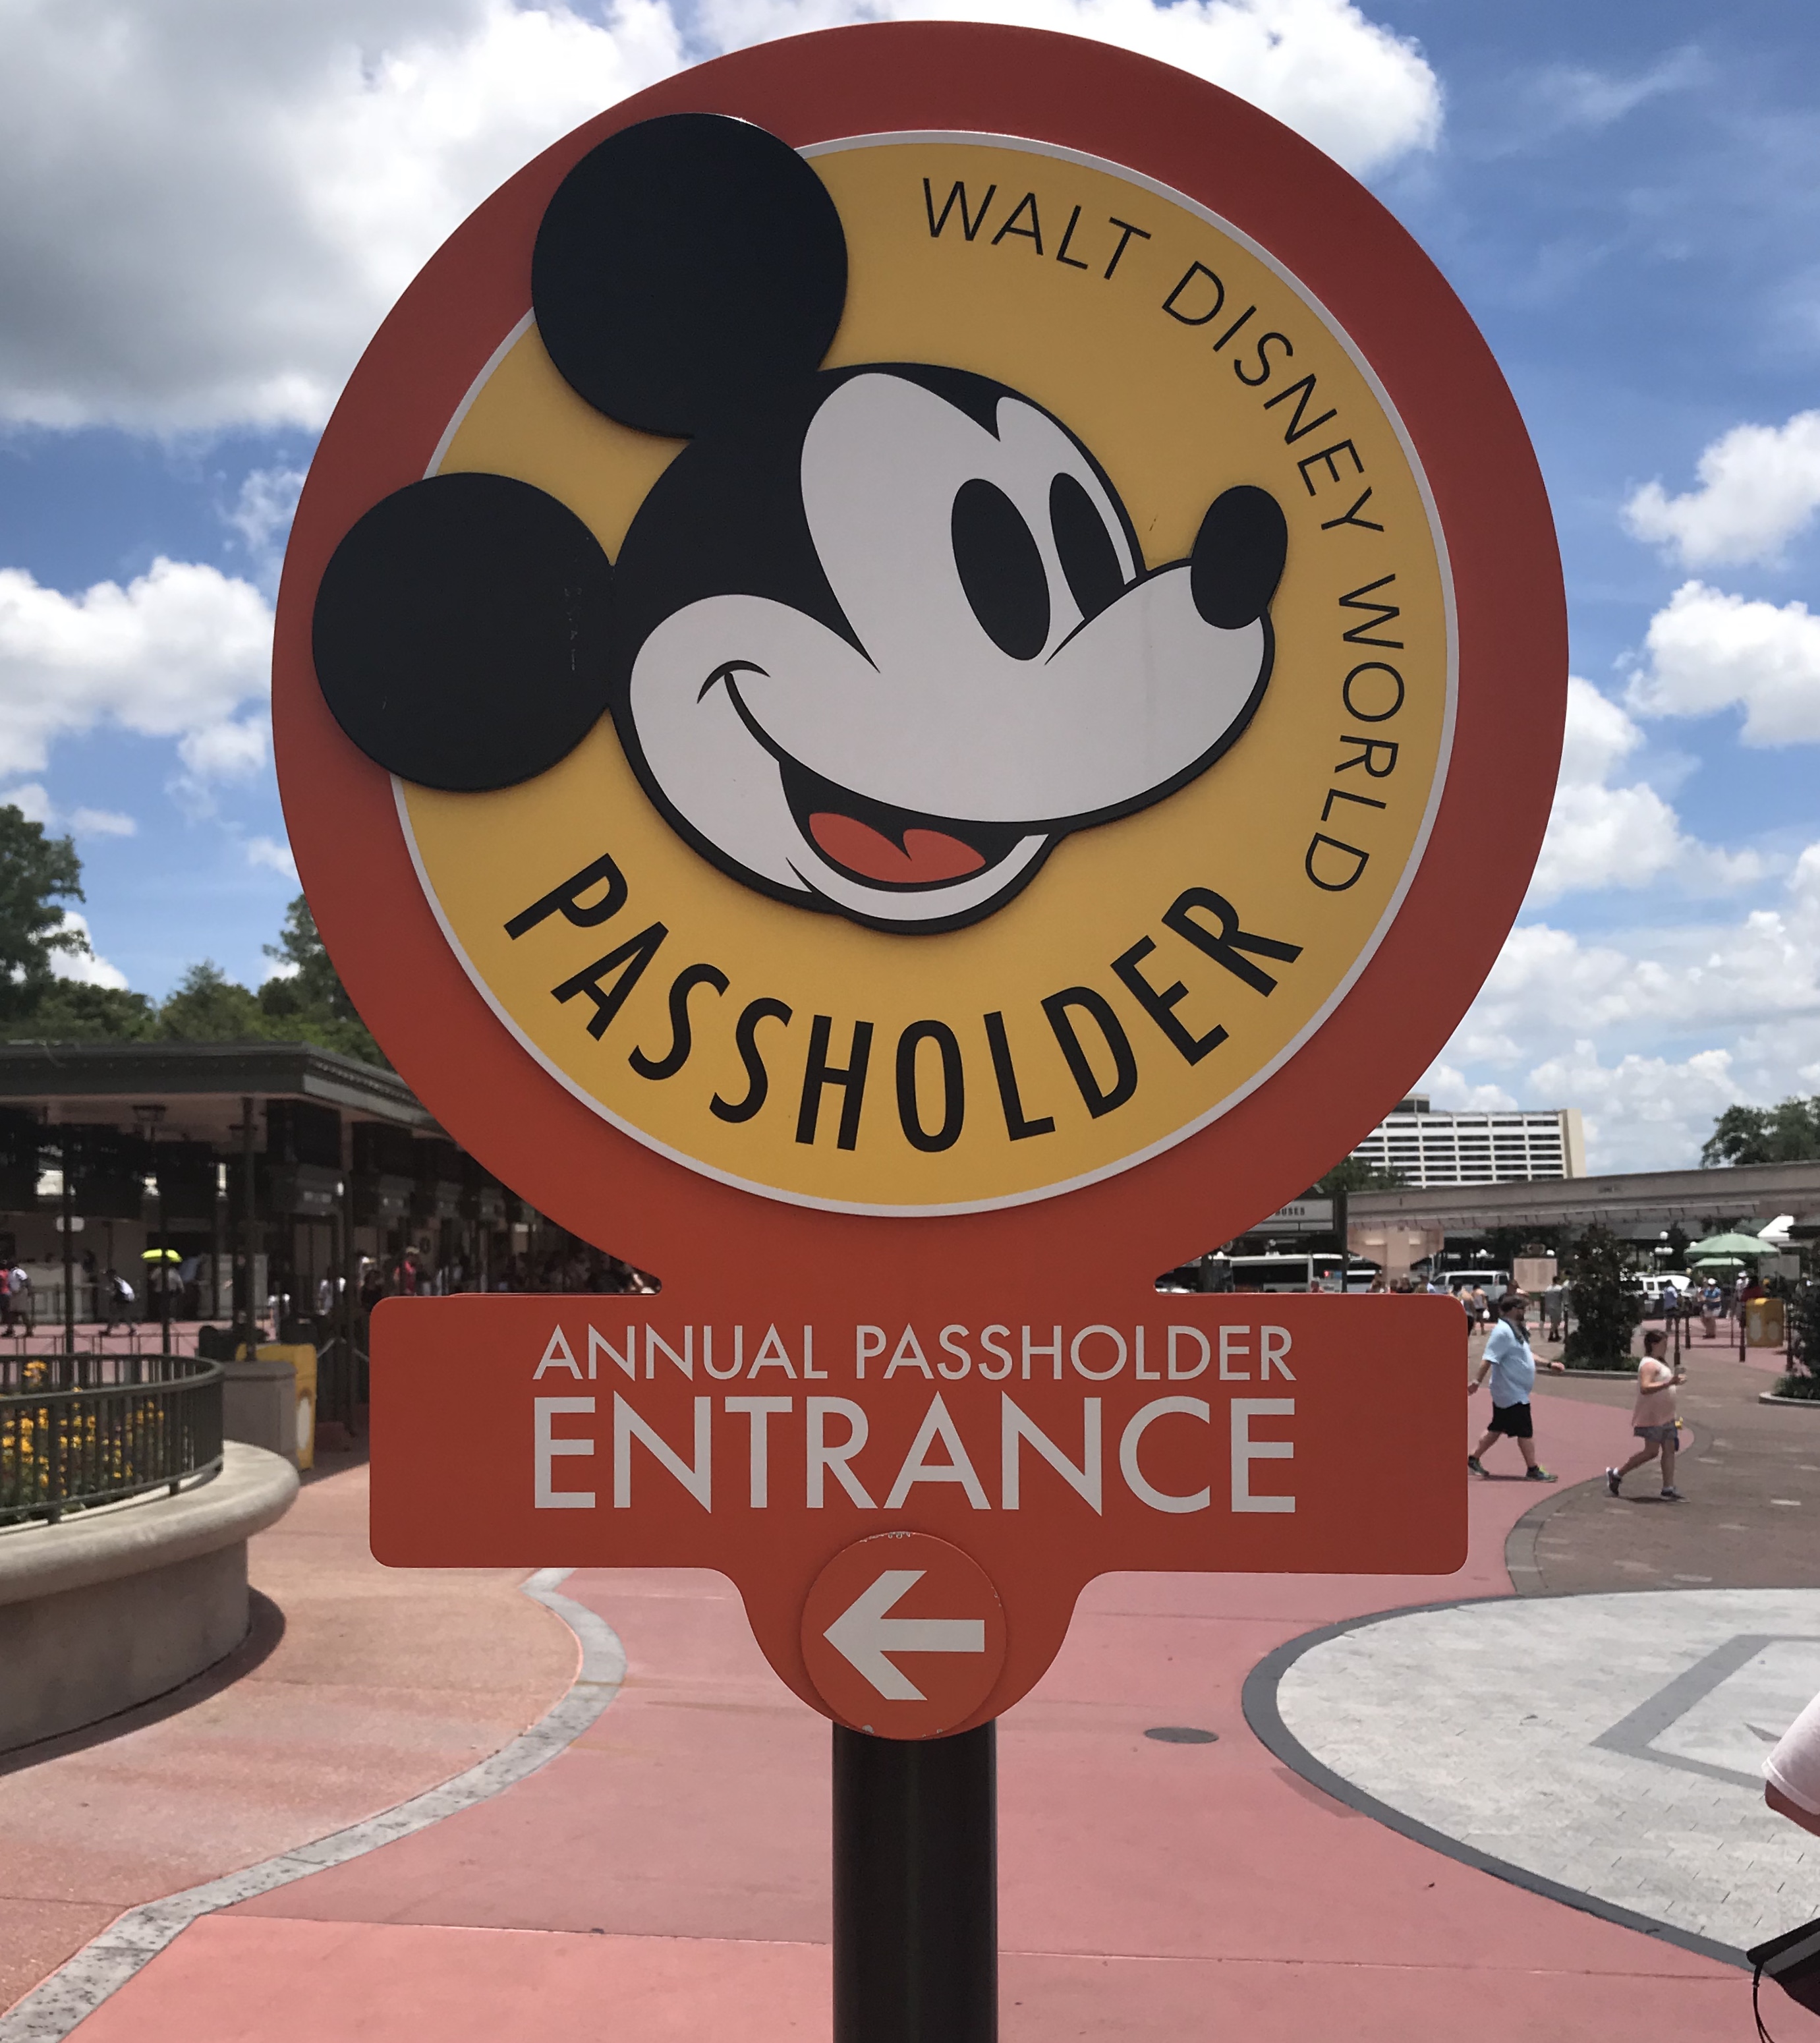 Disney World Annual Passes